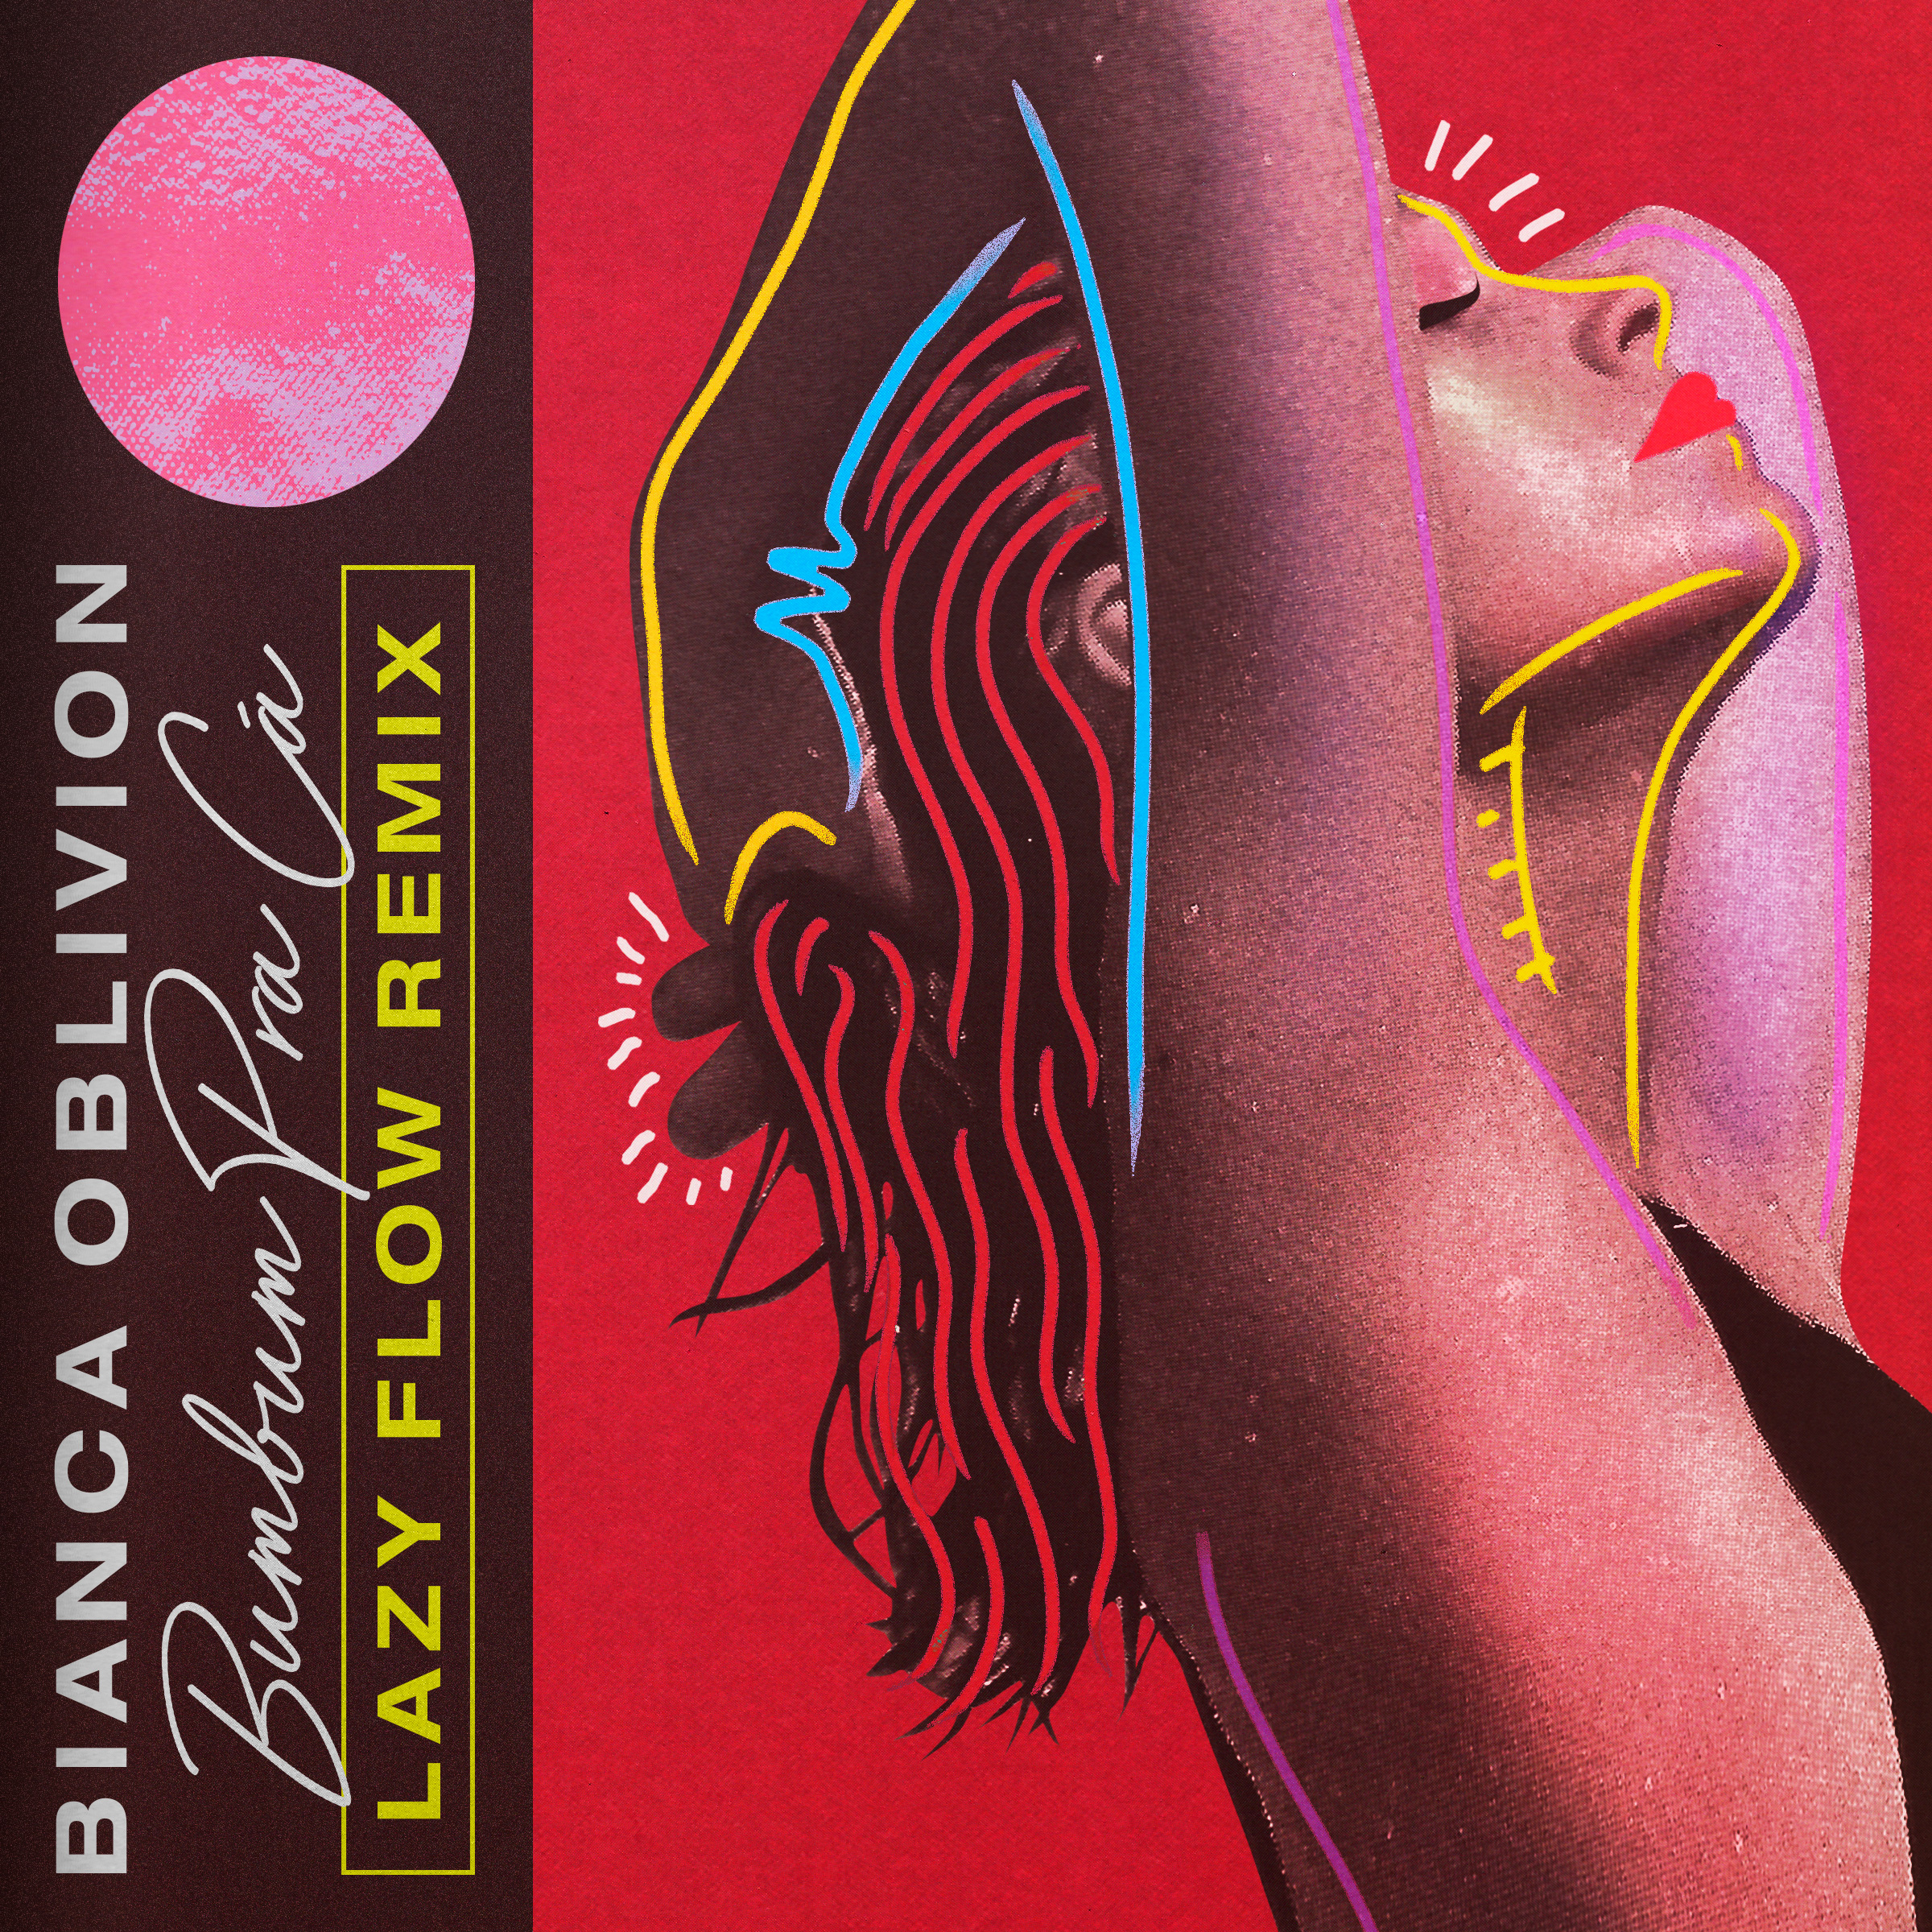 Stiahnuť ▼ [PREMIERE] Bianca Oblivion - Bumbum Pra Cá (Lazy Flow remix)